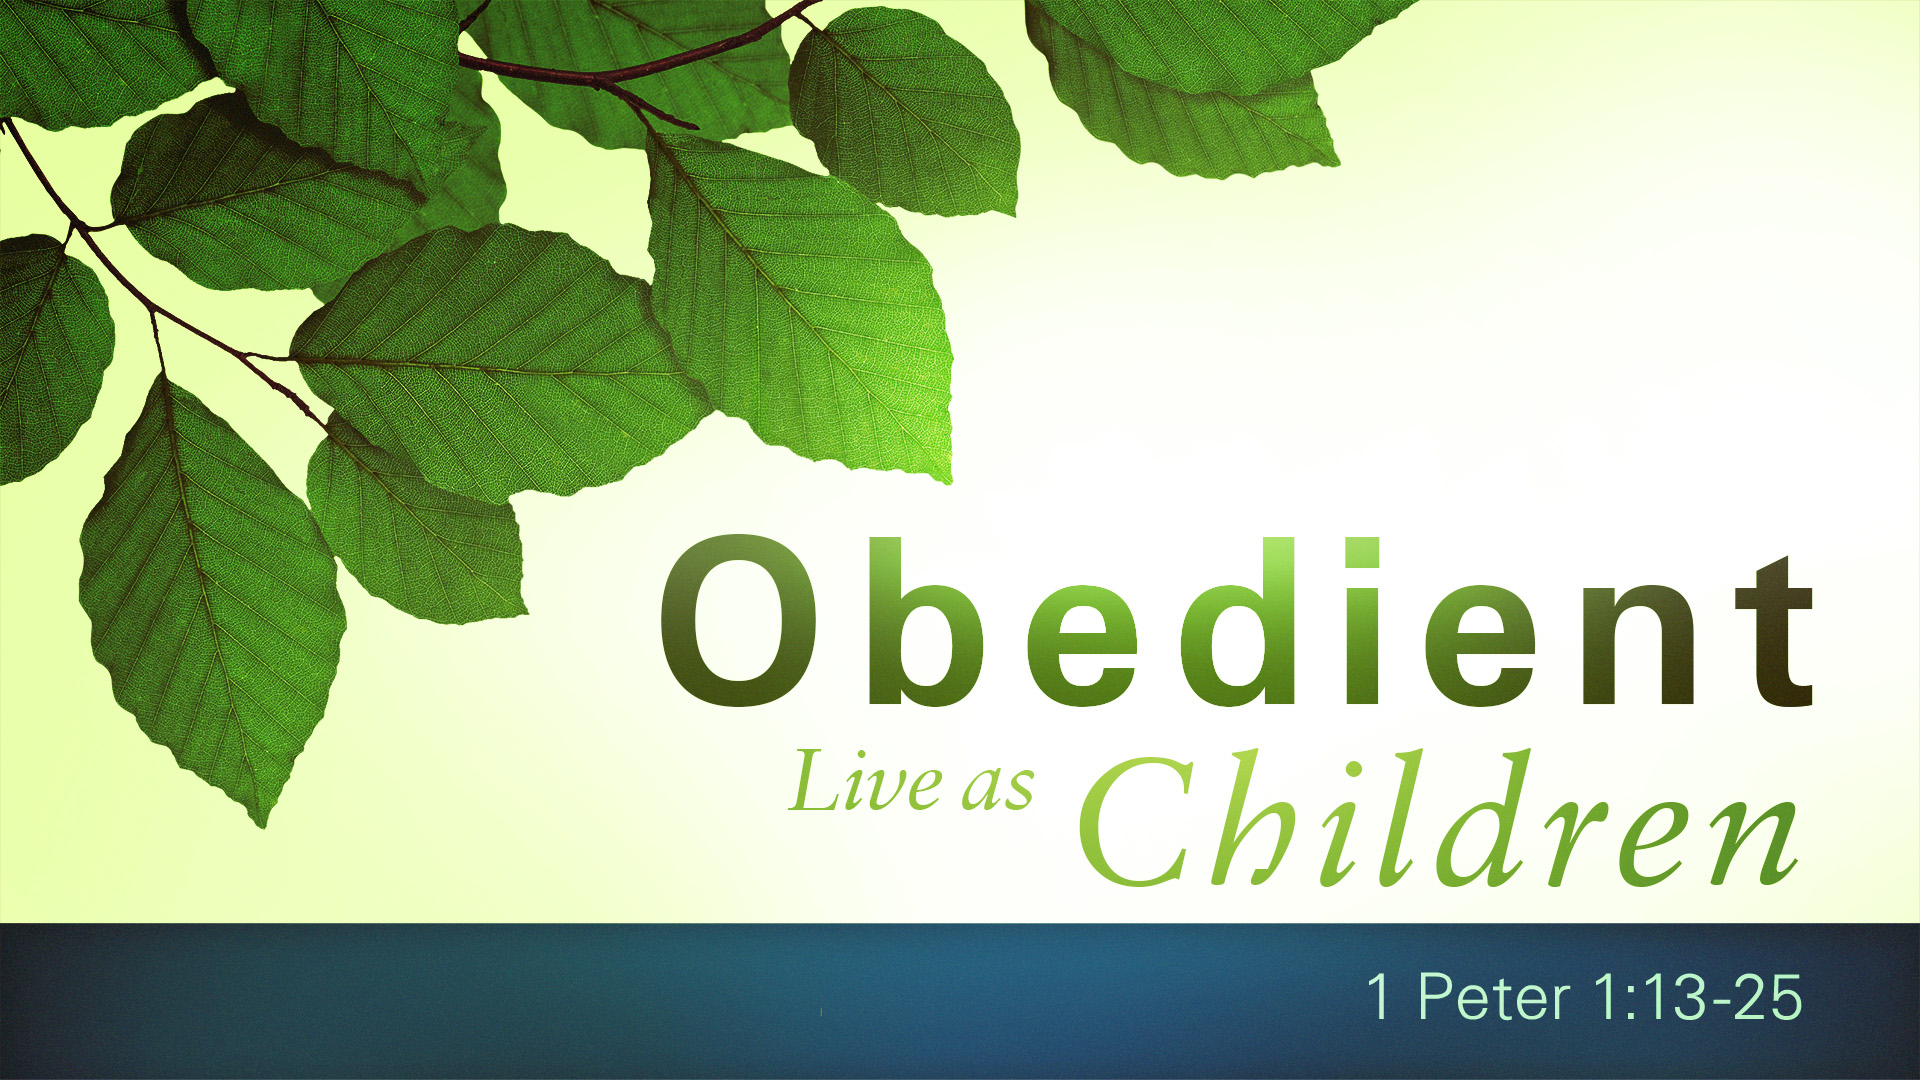 Live as Obedient Children